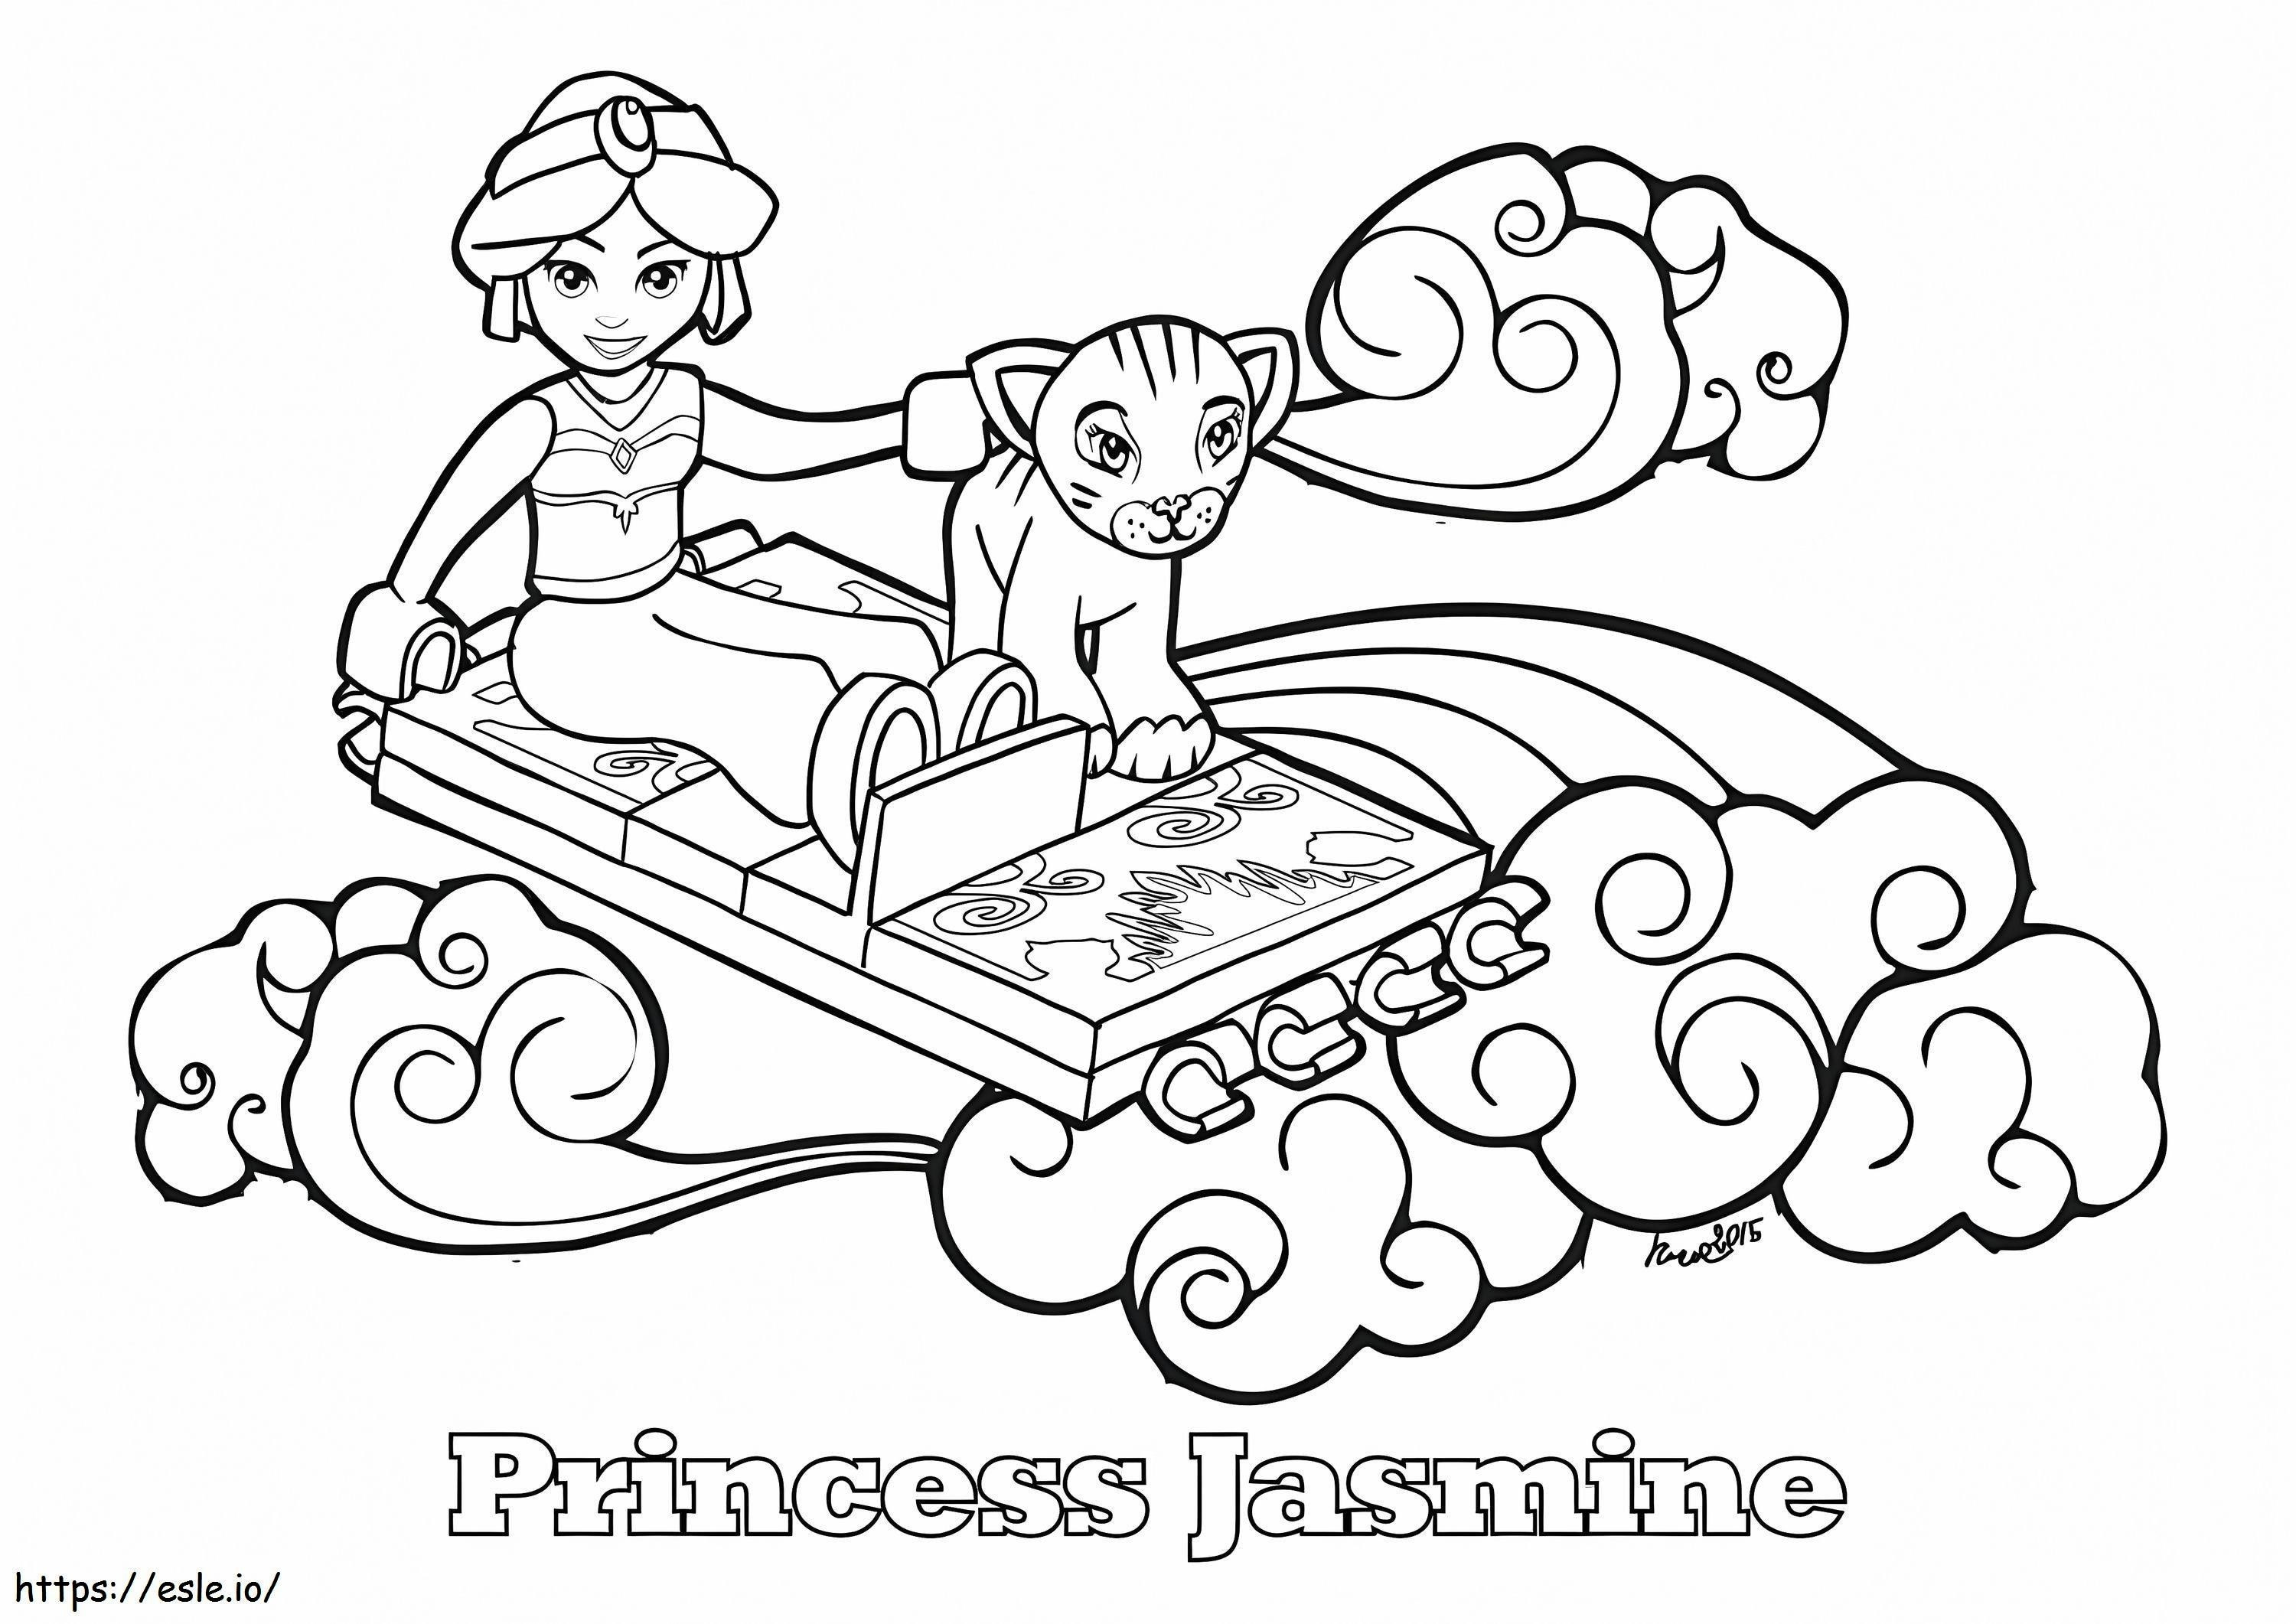 La Principessa Jasmine Lego da colorare